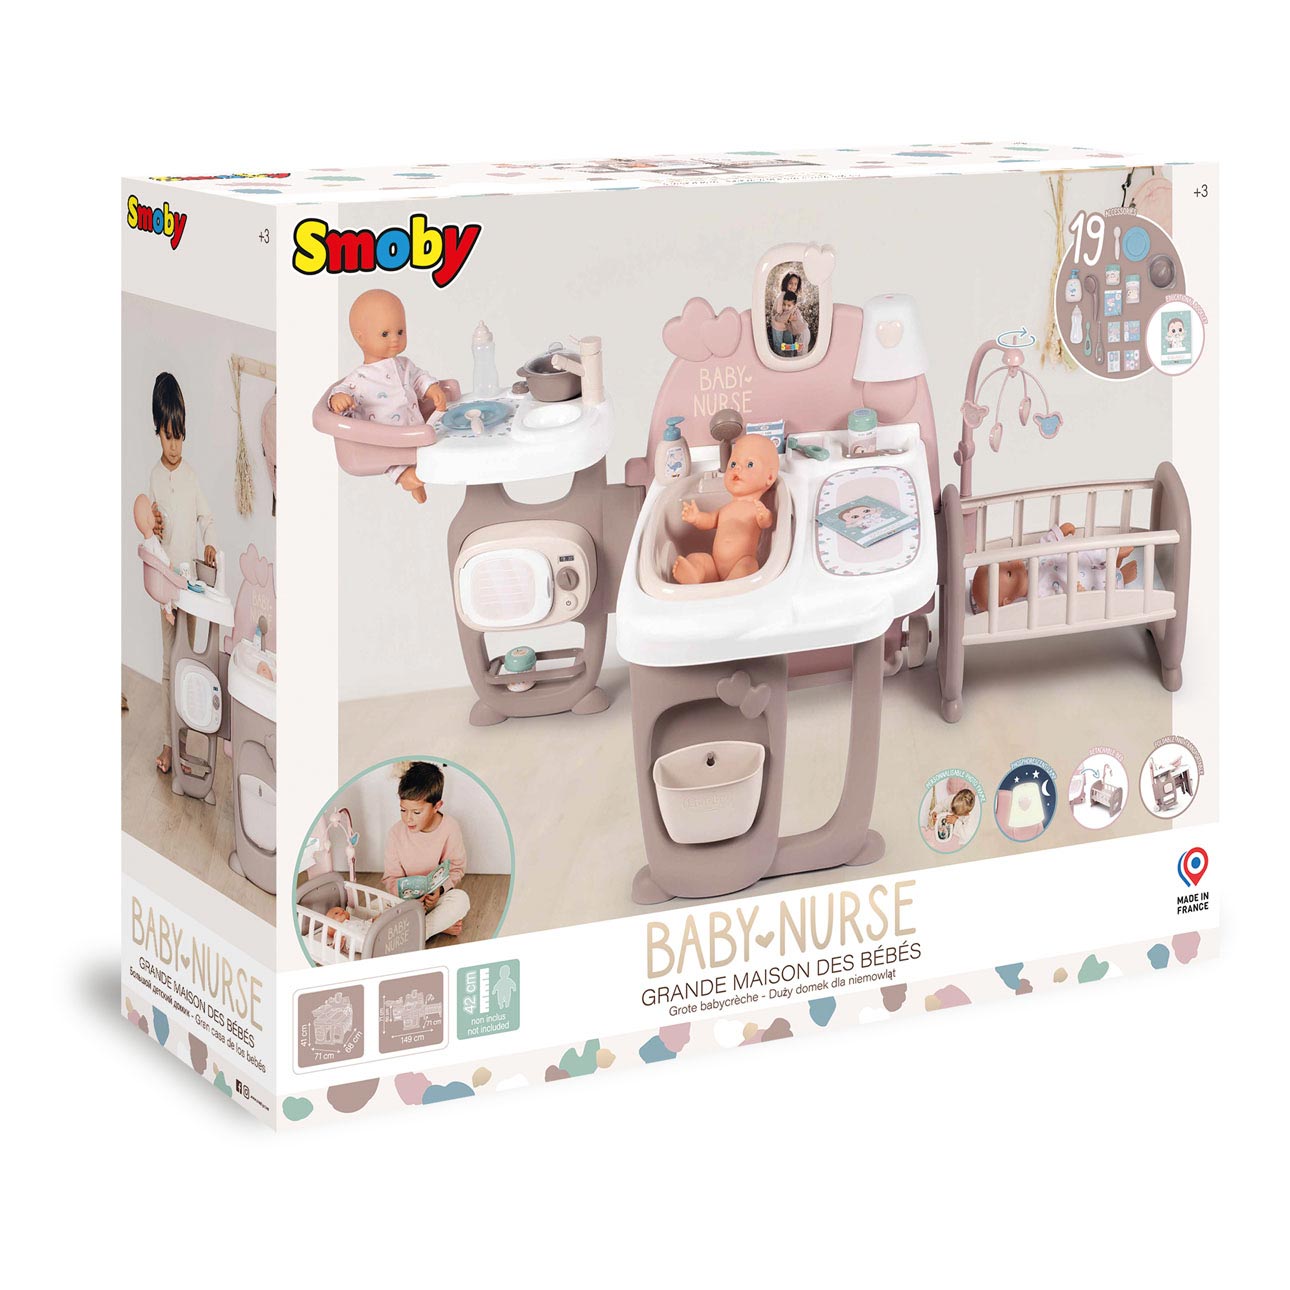 Buy Smoby Baby Nurse Toilets online